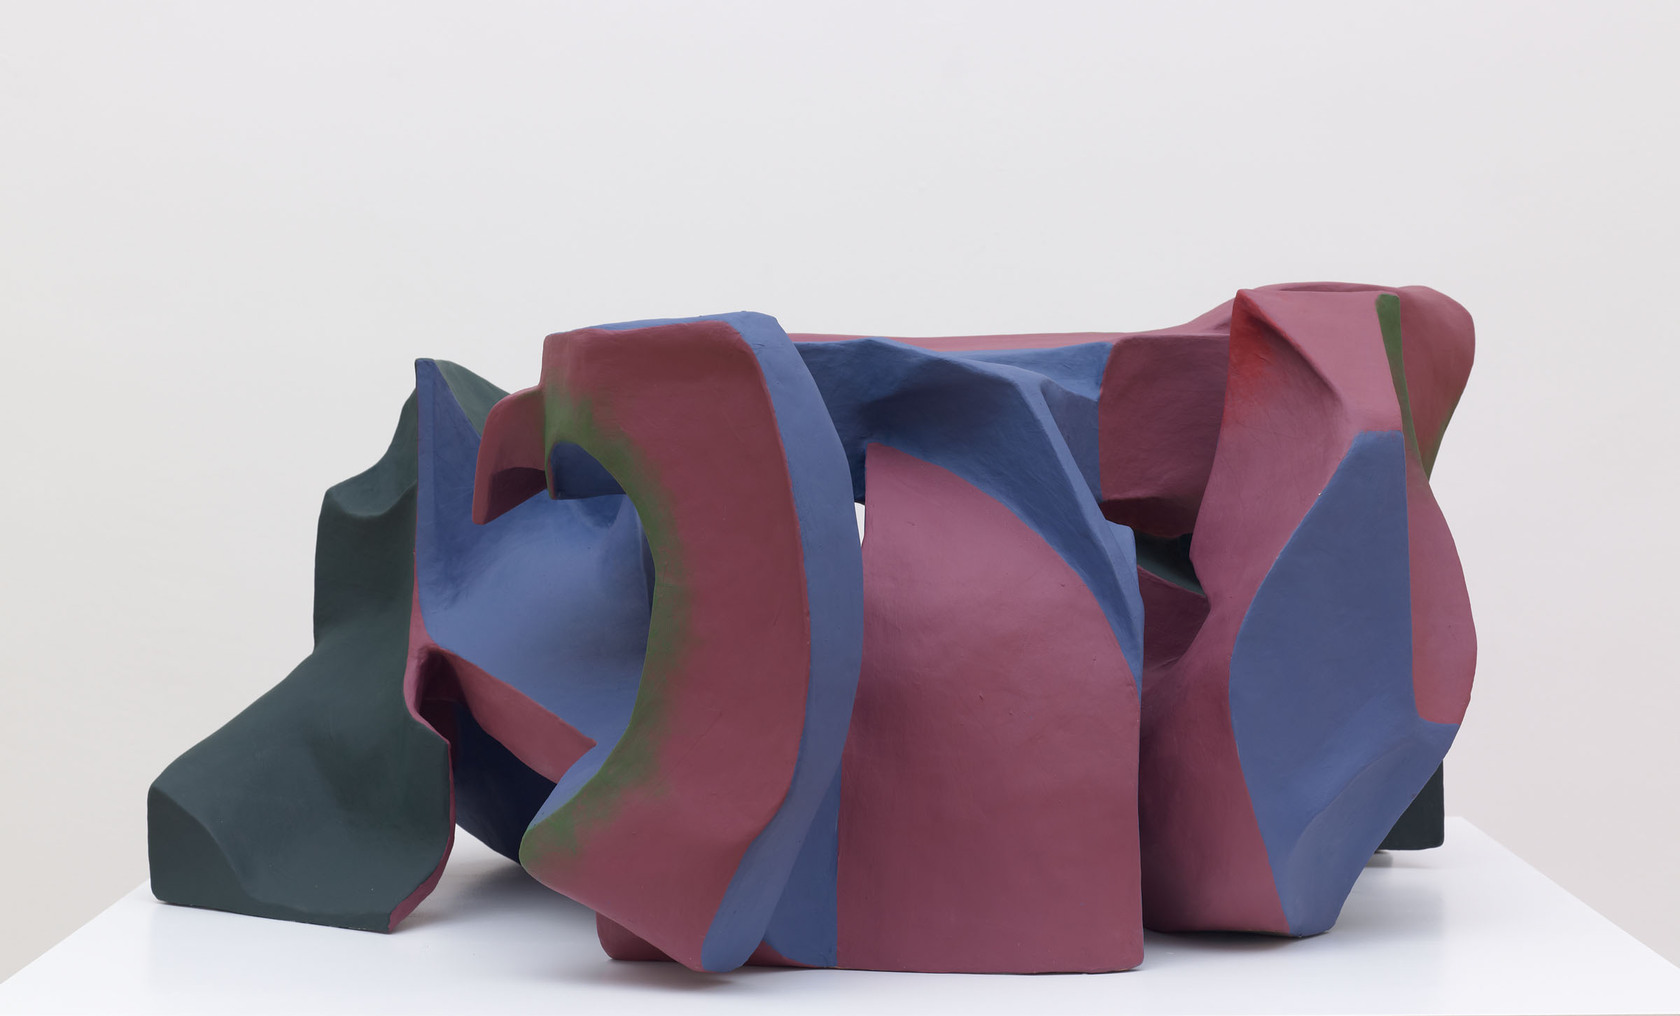 an abstract sculpture made of paper mâché.